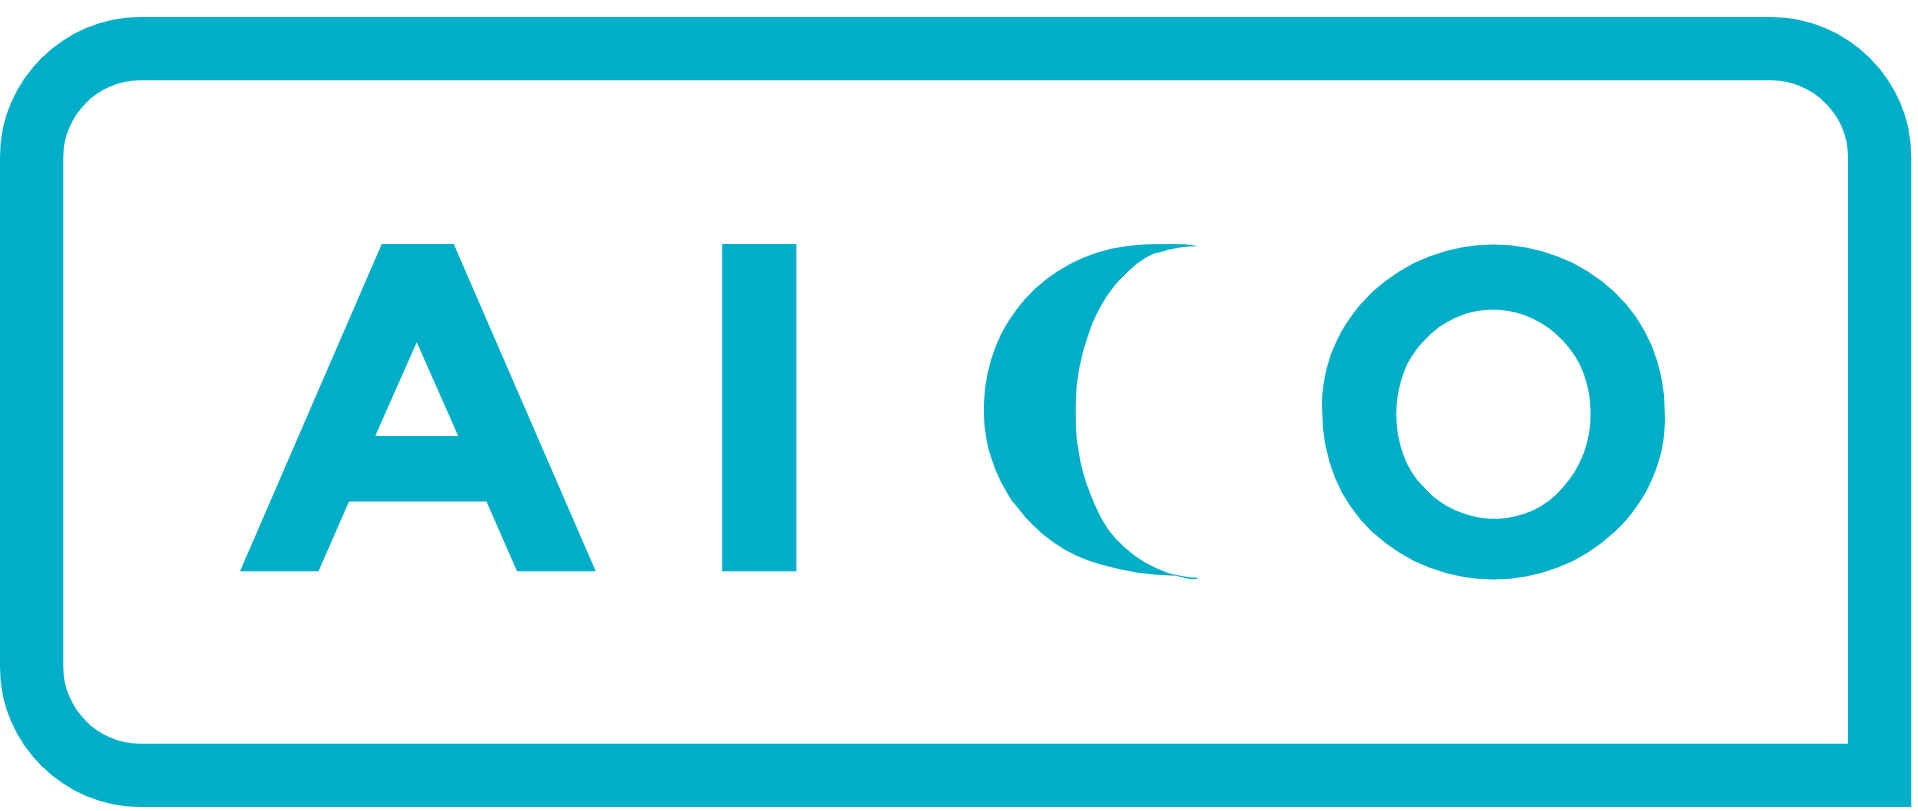 Aico-logo.png